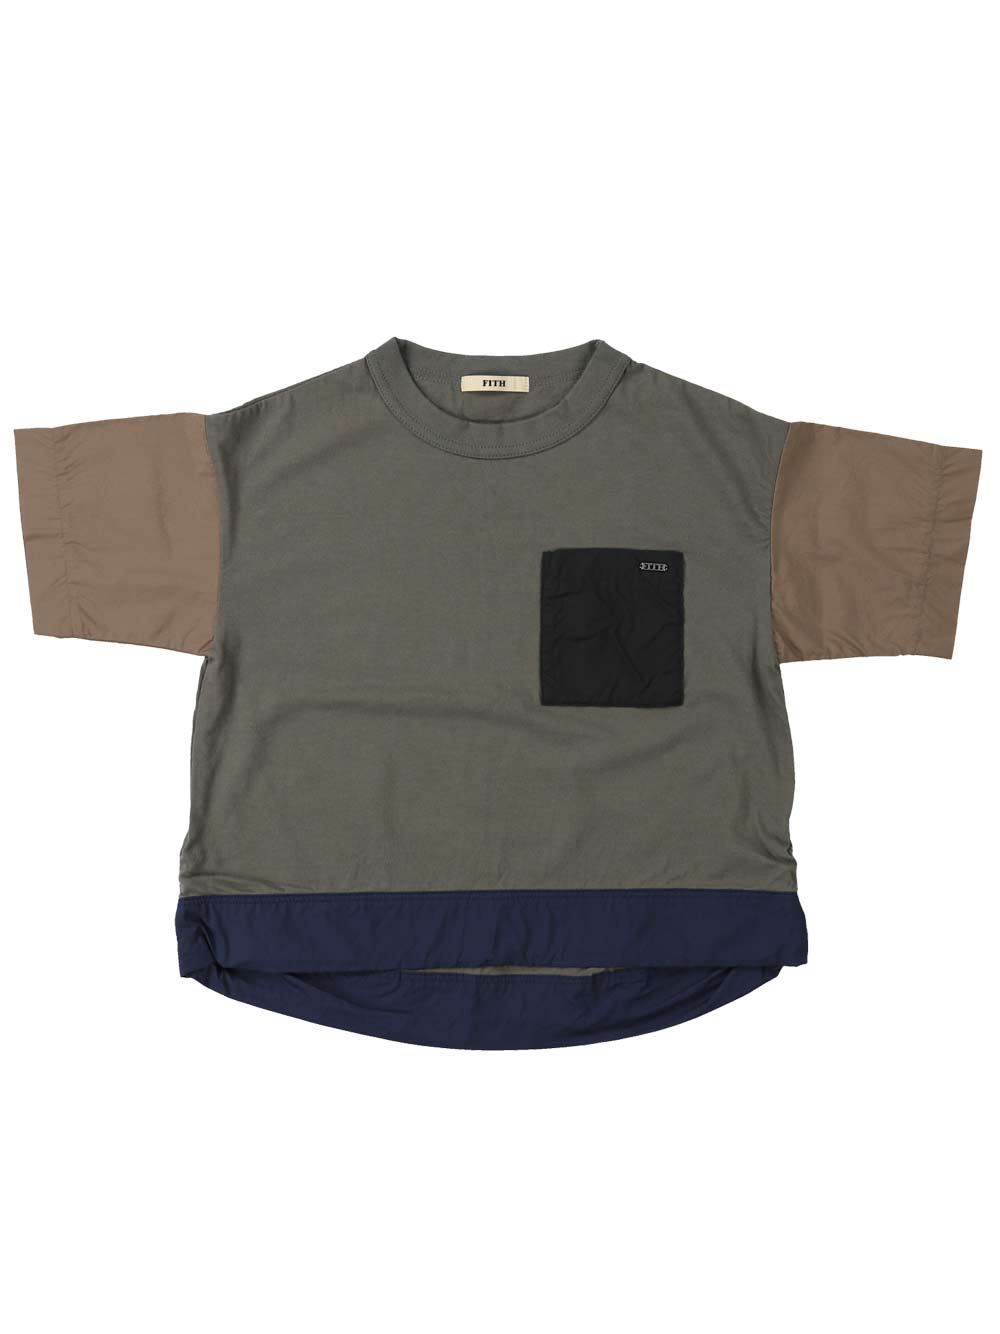 Khaki Front Pocket T-Shirt